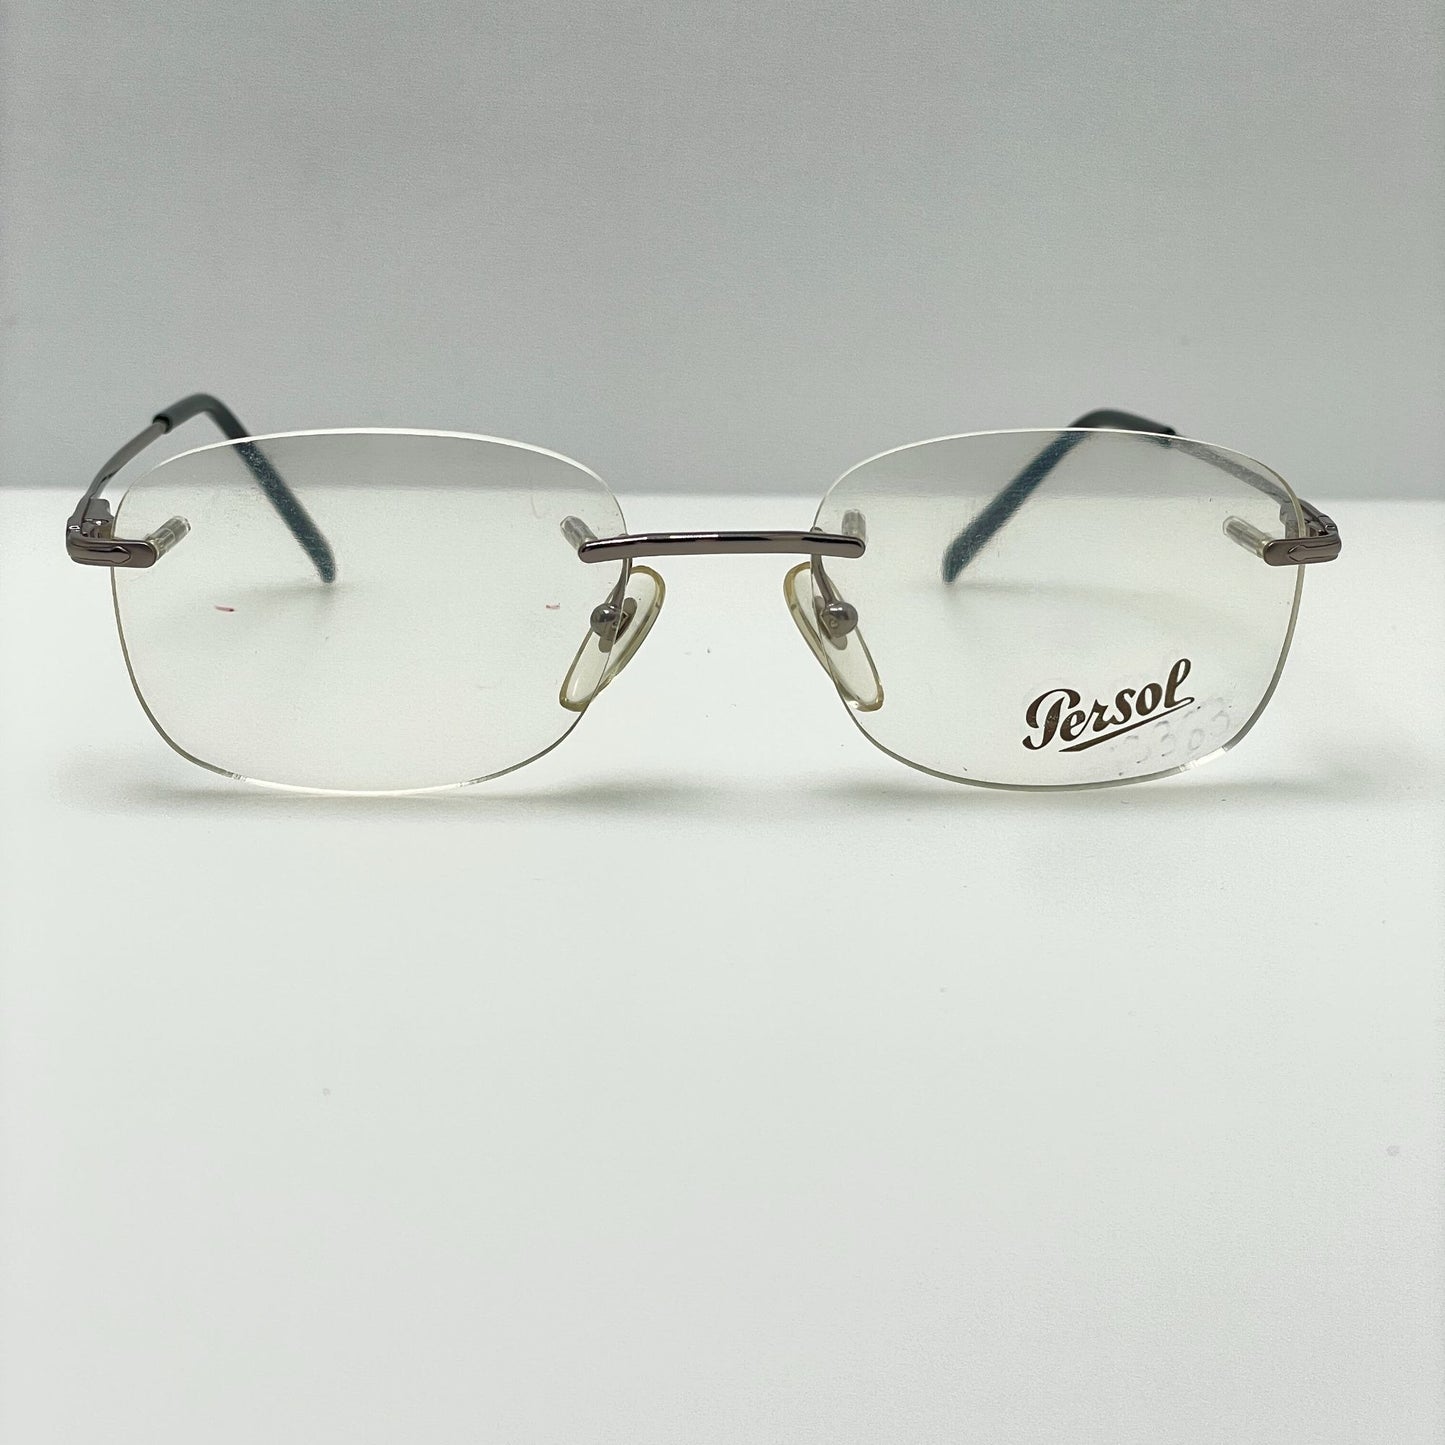 Persol Eyeglasses Eye Glasses Frames 2106 587 53-18-40